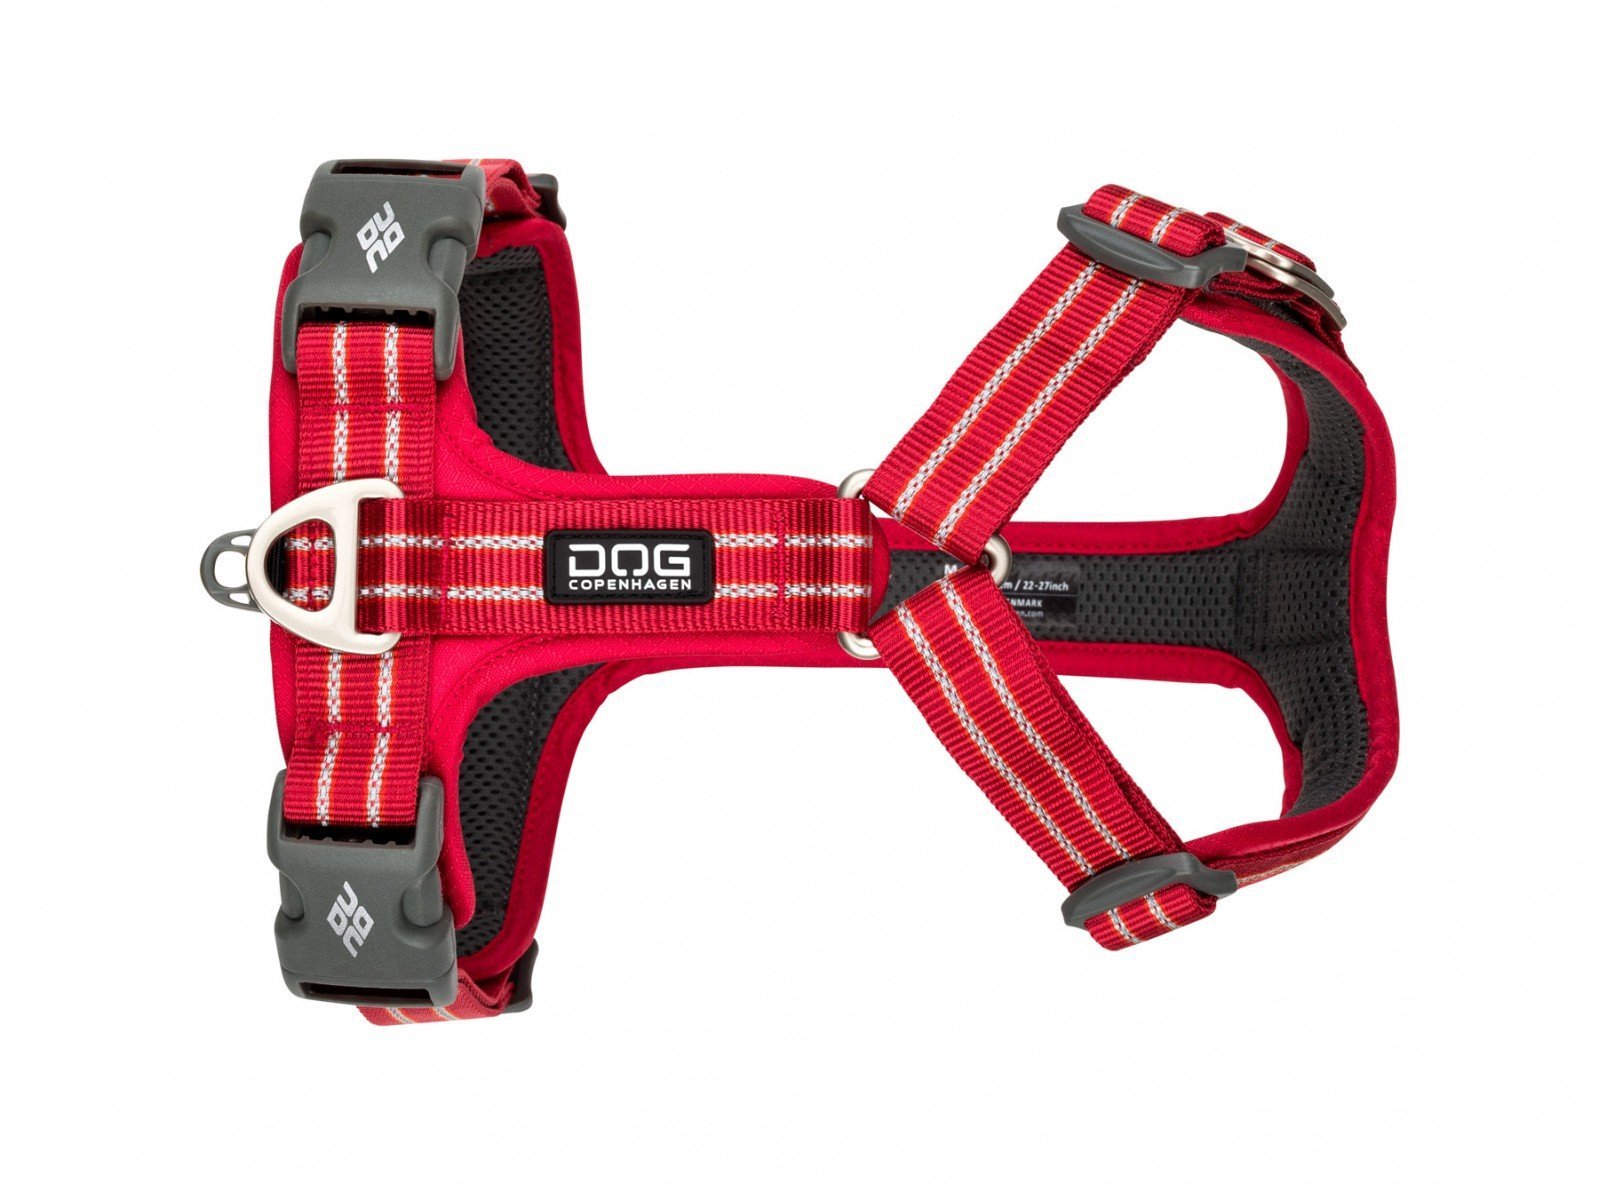 Dog Copenhagen - Comfort Walk Pro Harness - "Version" 2020 Classic Red